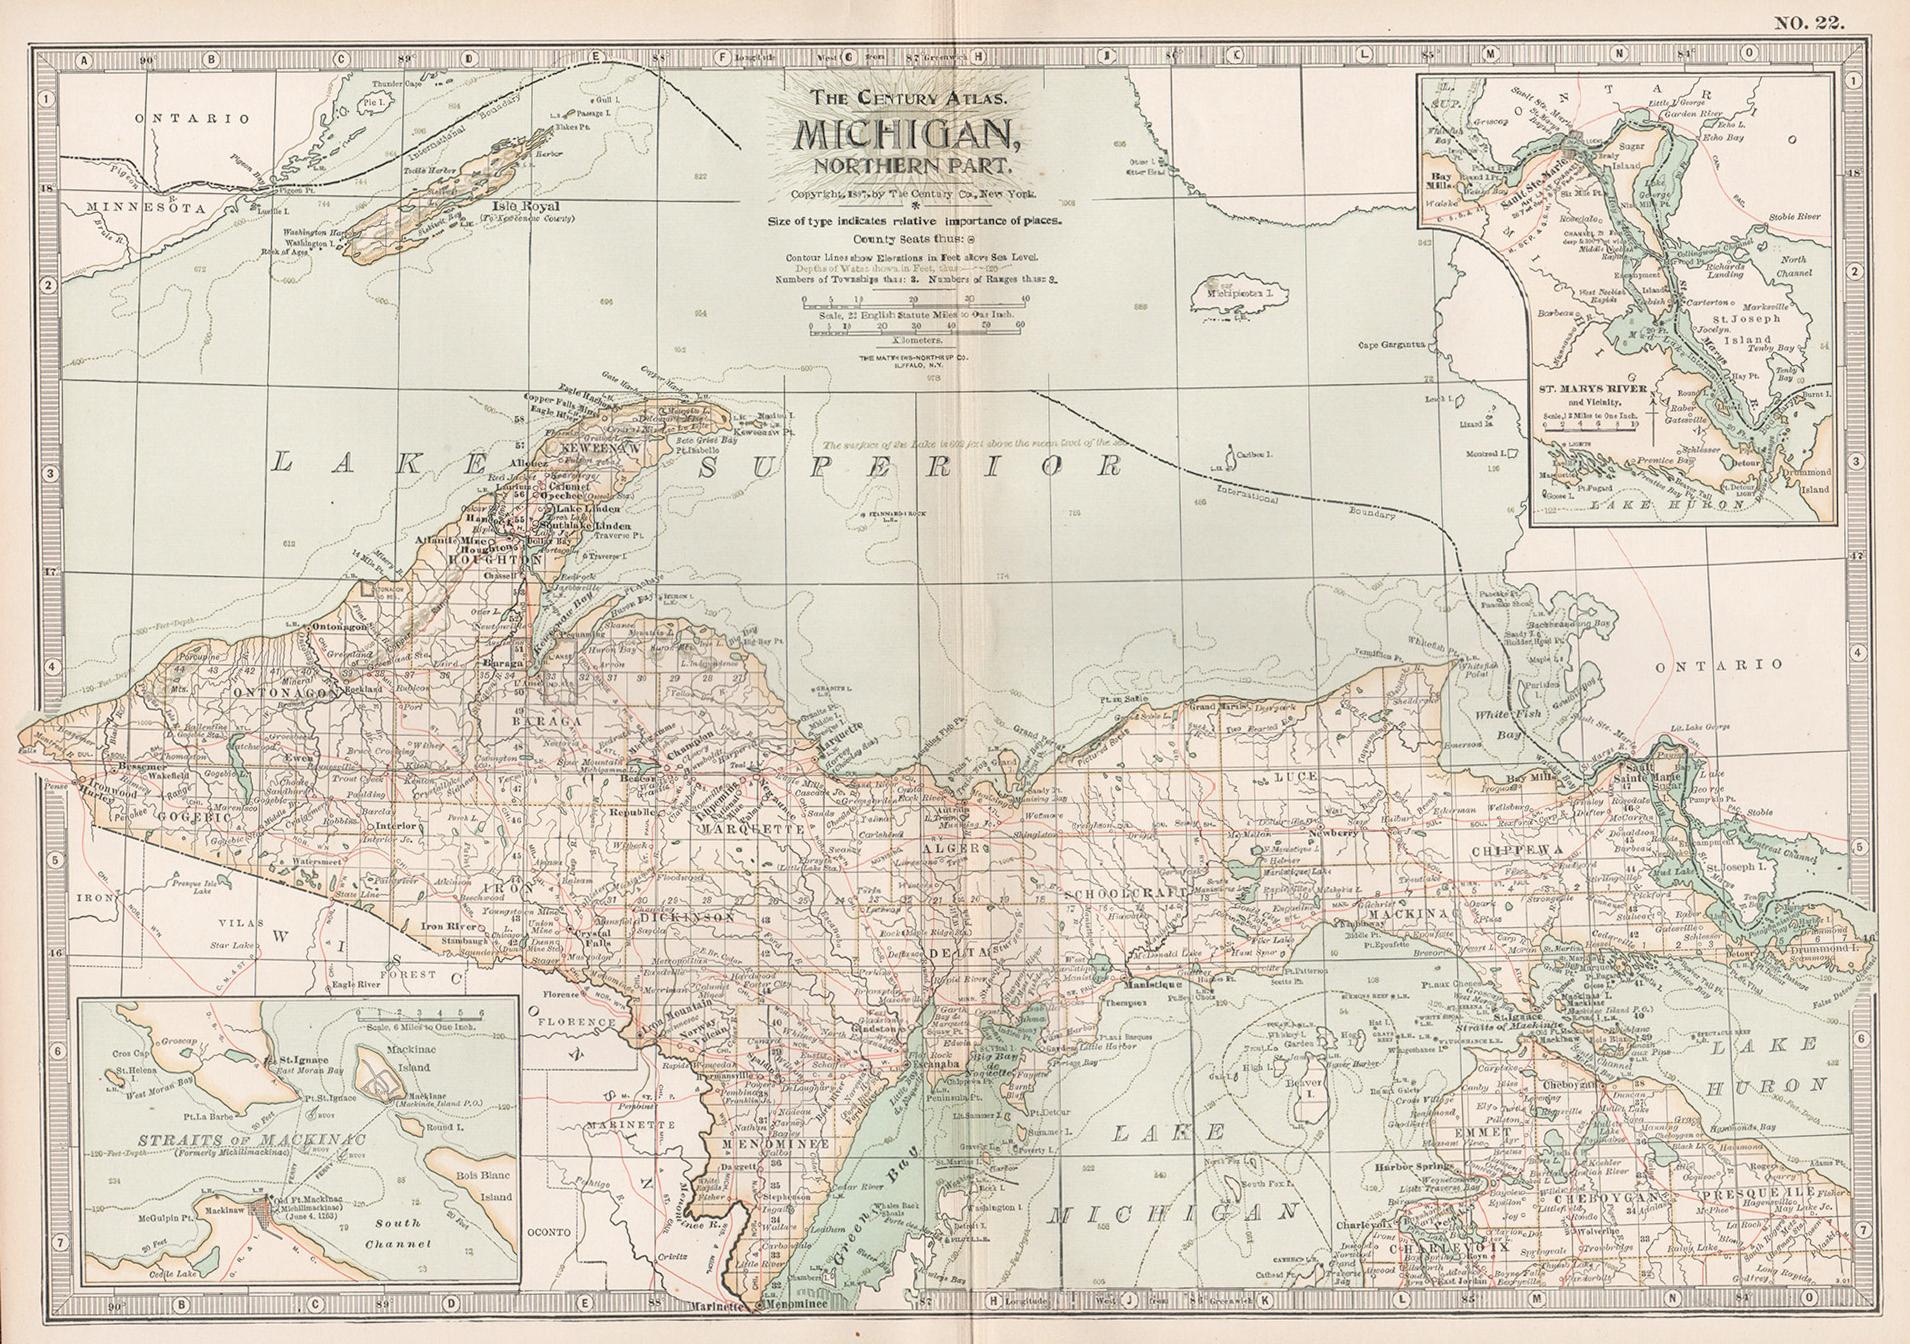 Unknown Print - Michigan, Northern Part. USA. Century Atlas state antique vintage map